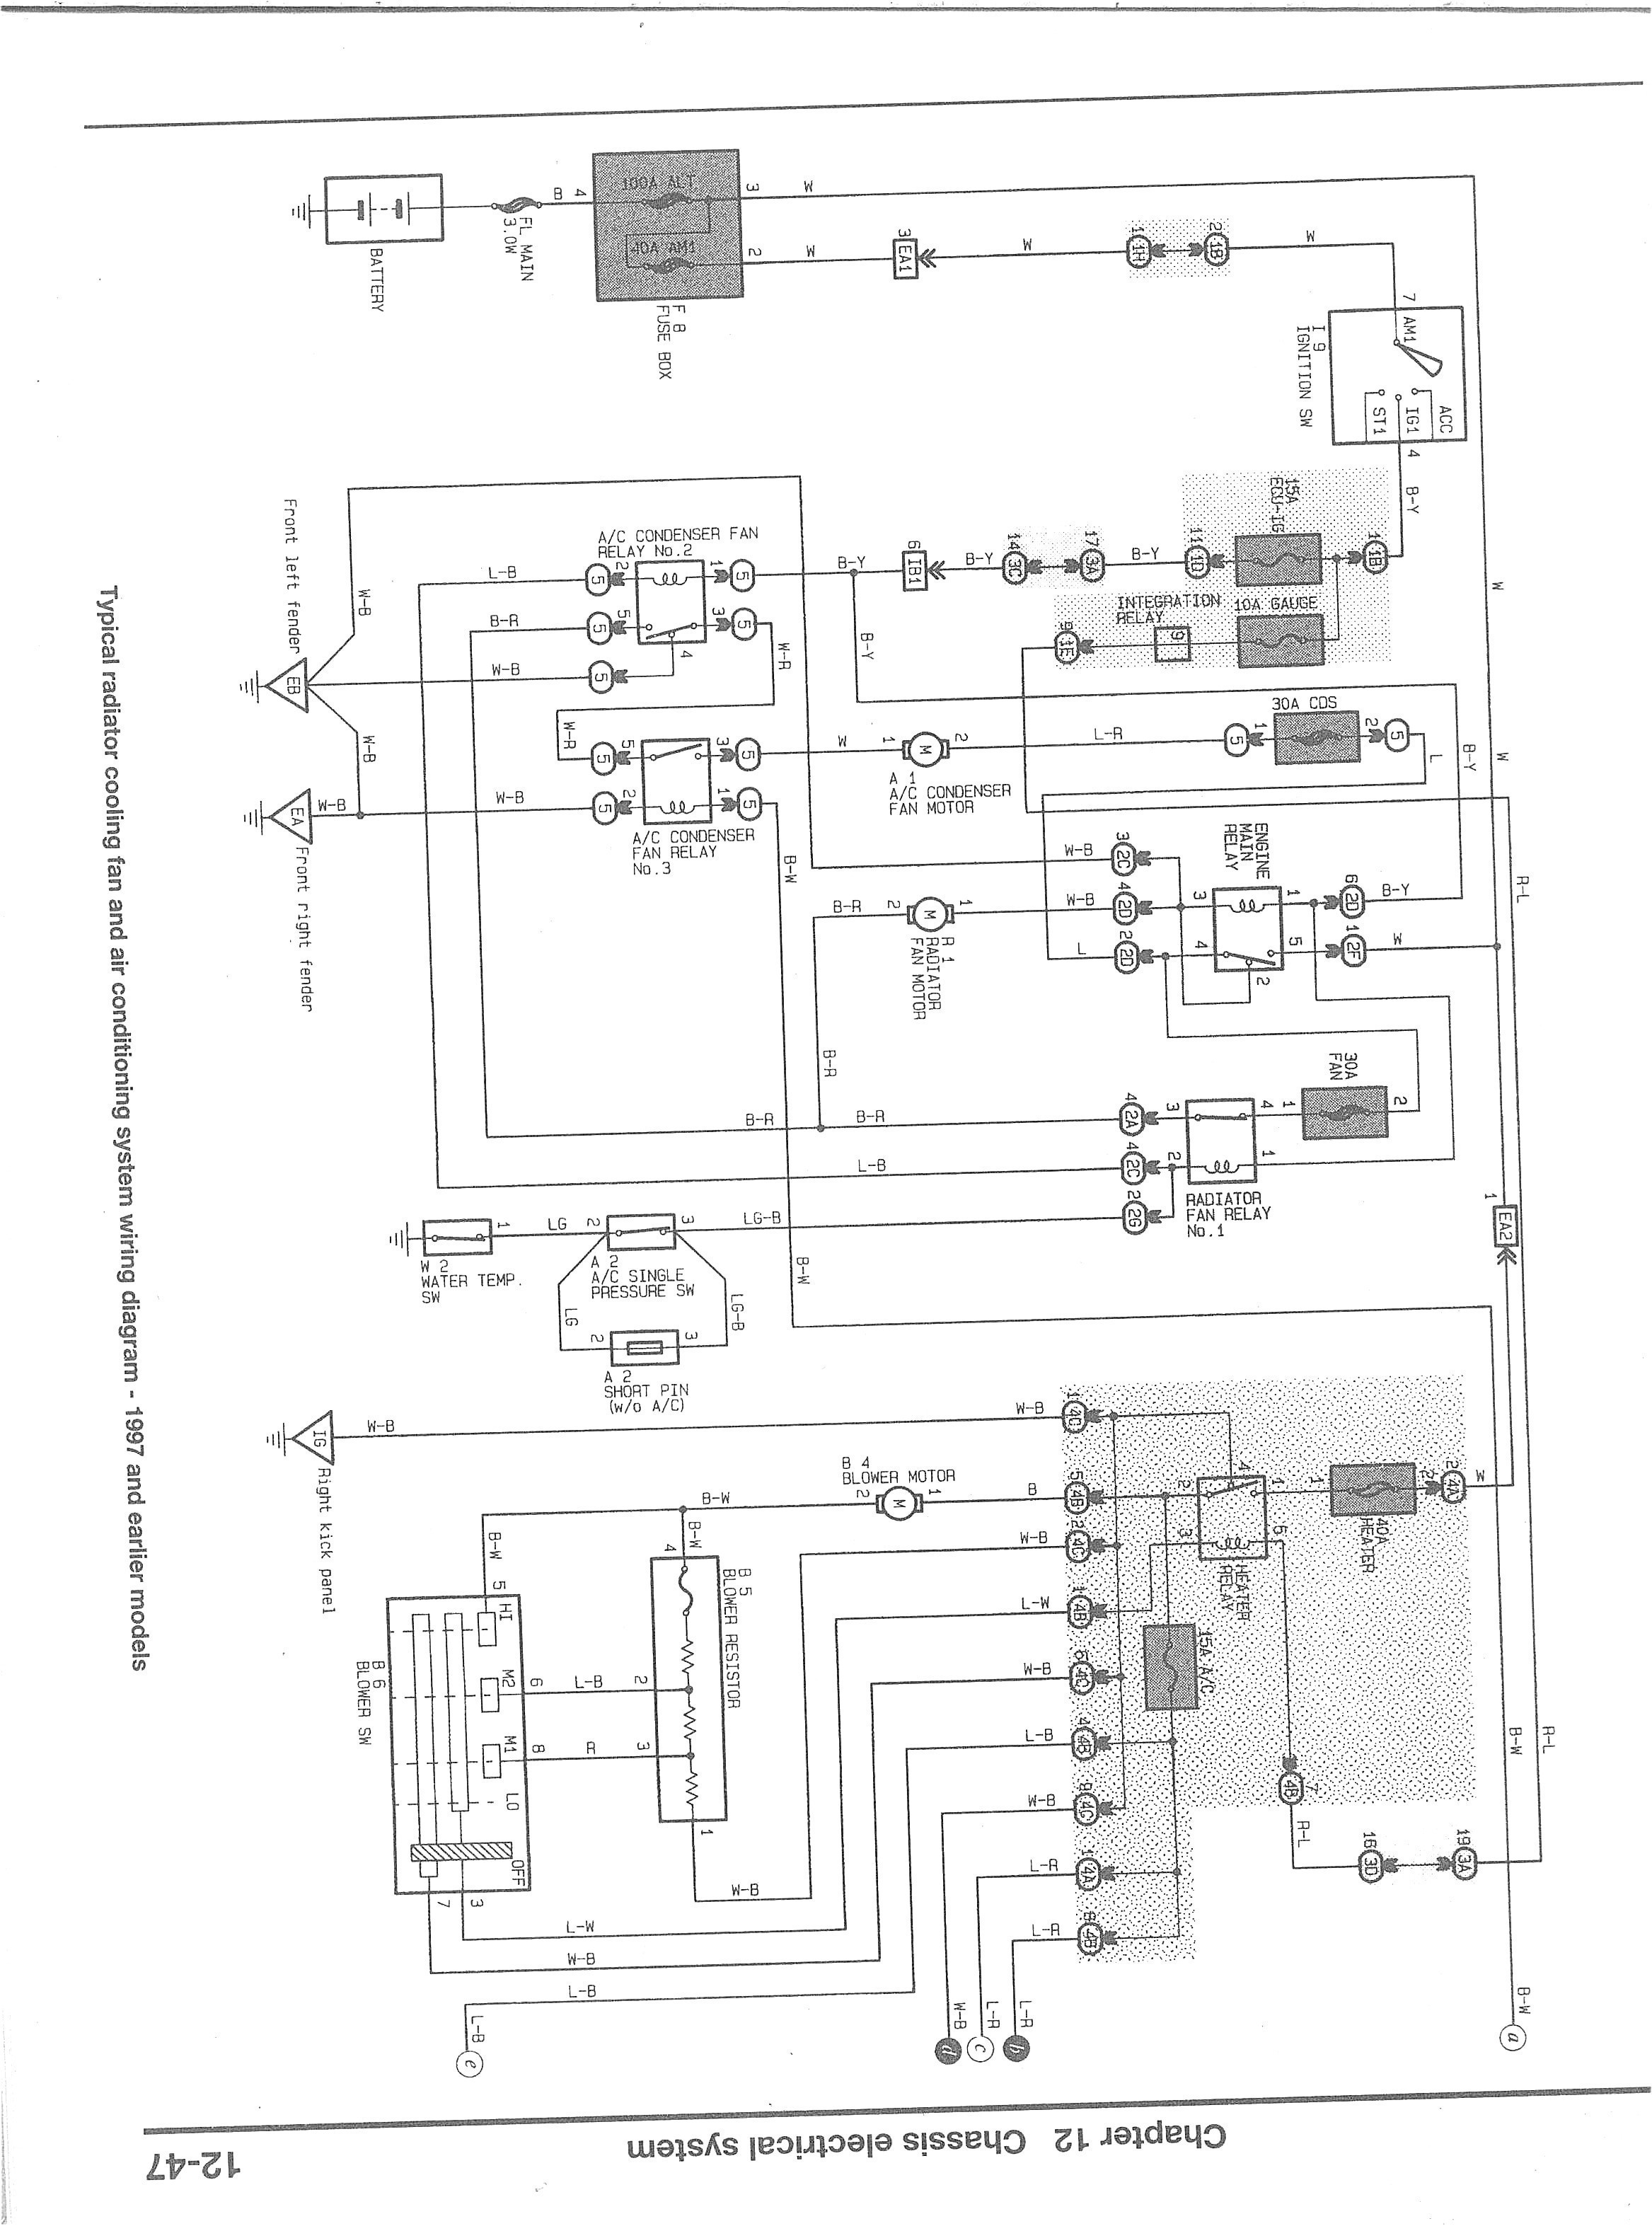 Fujitsu Ten Car Audio Wiring Diagram Fujitsu Inverter Wiring Diagram Fresh Fujitsu Inverter Wiring Of Fujitsu Ten Car Audio Wiring Diagram